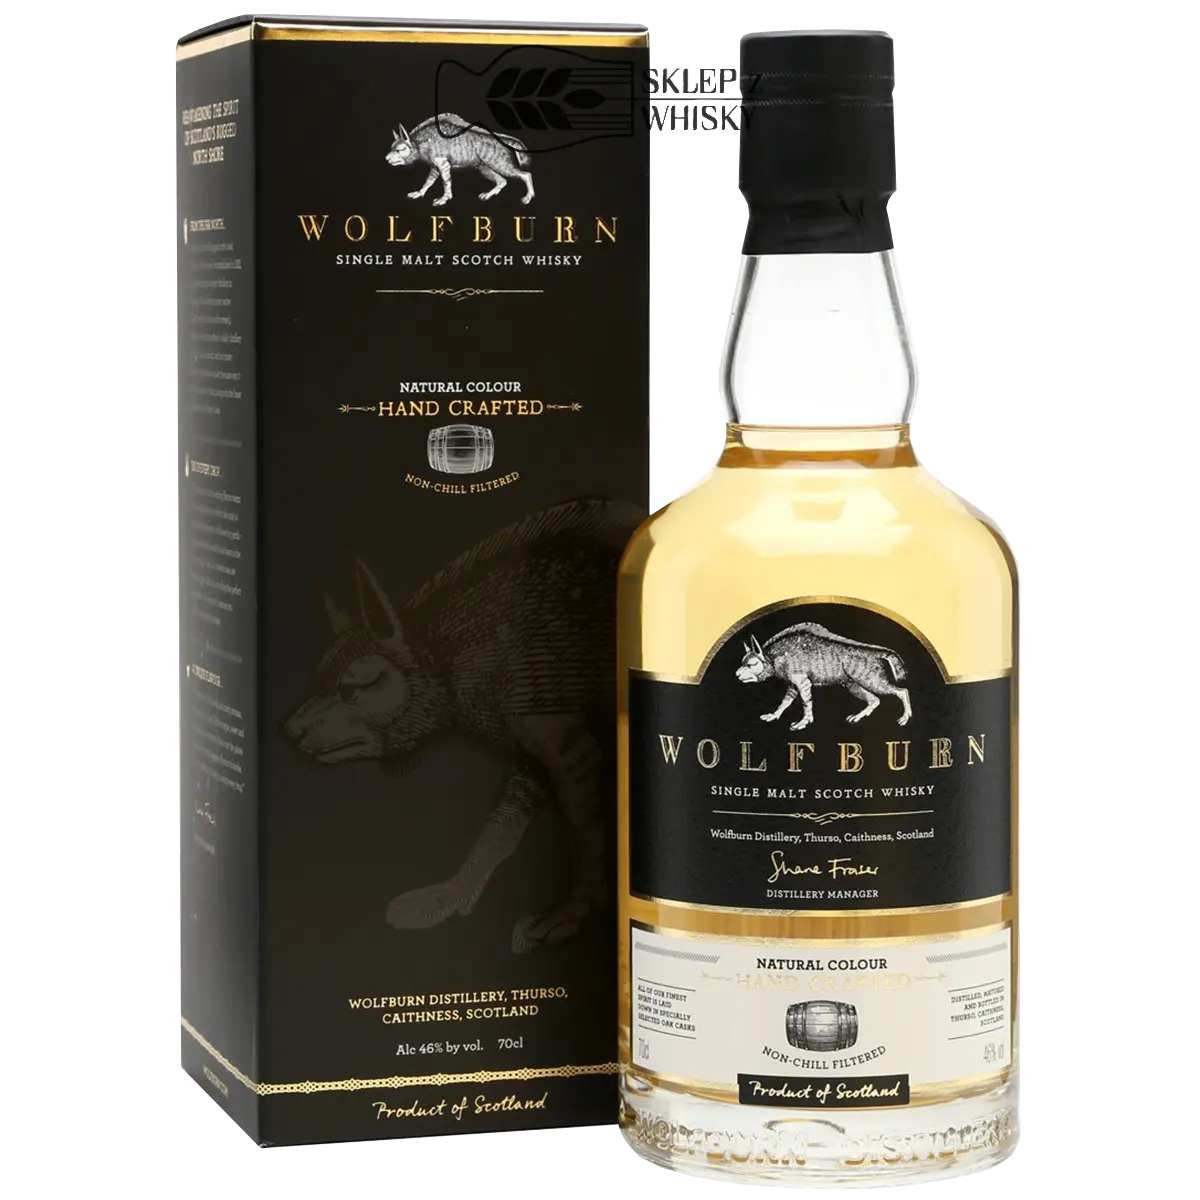 Wolfburn 3 YO Hand Crafted - szkocka whisky single malt z regionu Highland, 700 ml, w pudełku